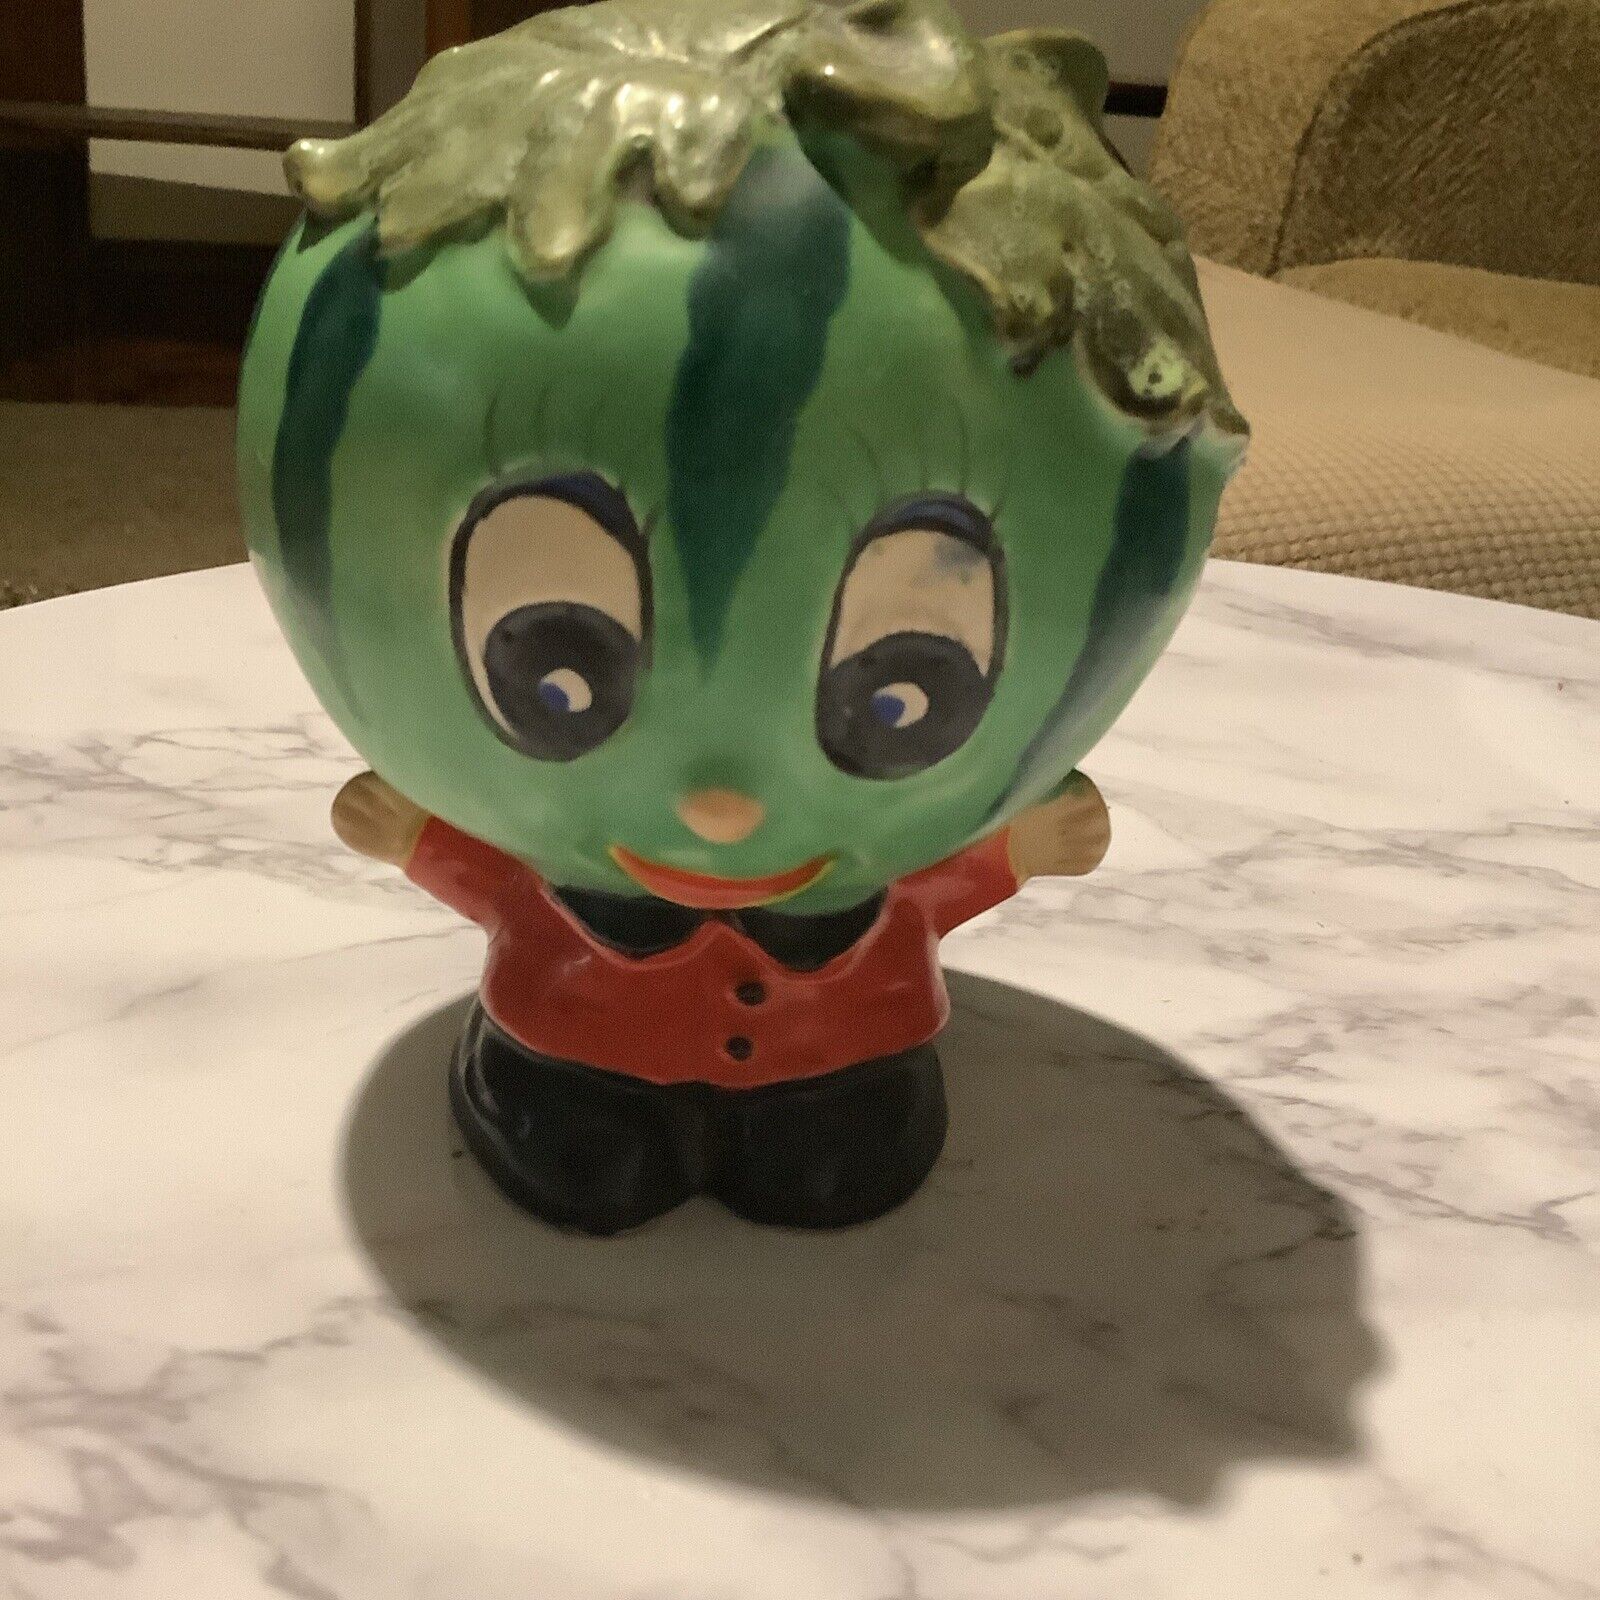 Anthropomorphic Watermelon man planter - vintage - Japan - nice